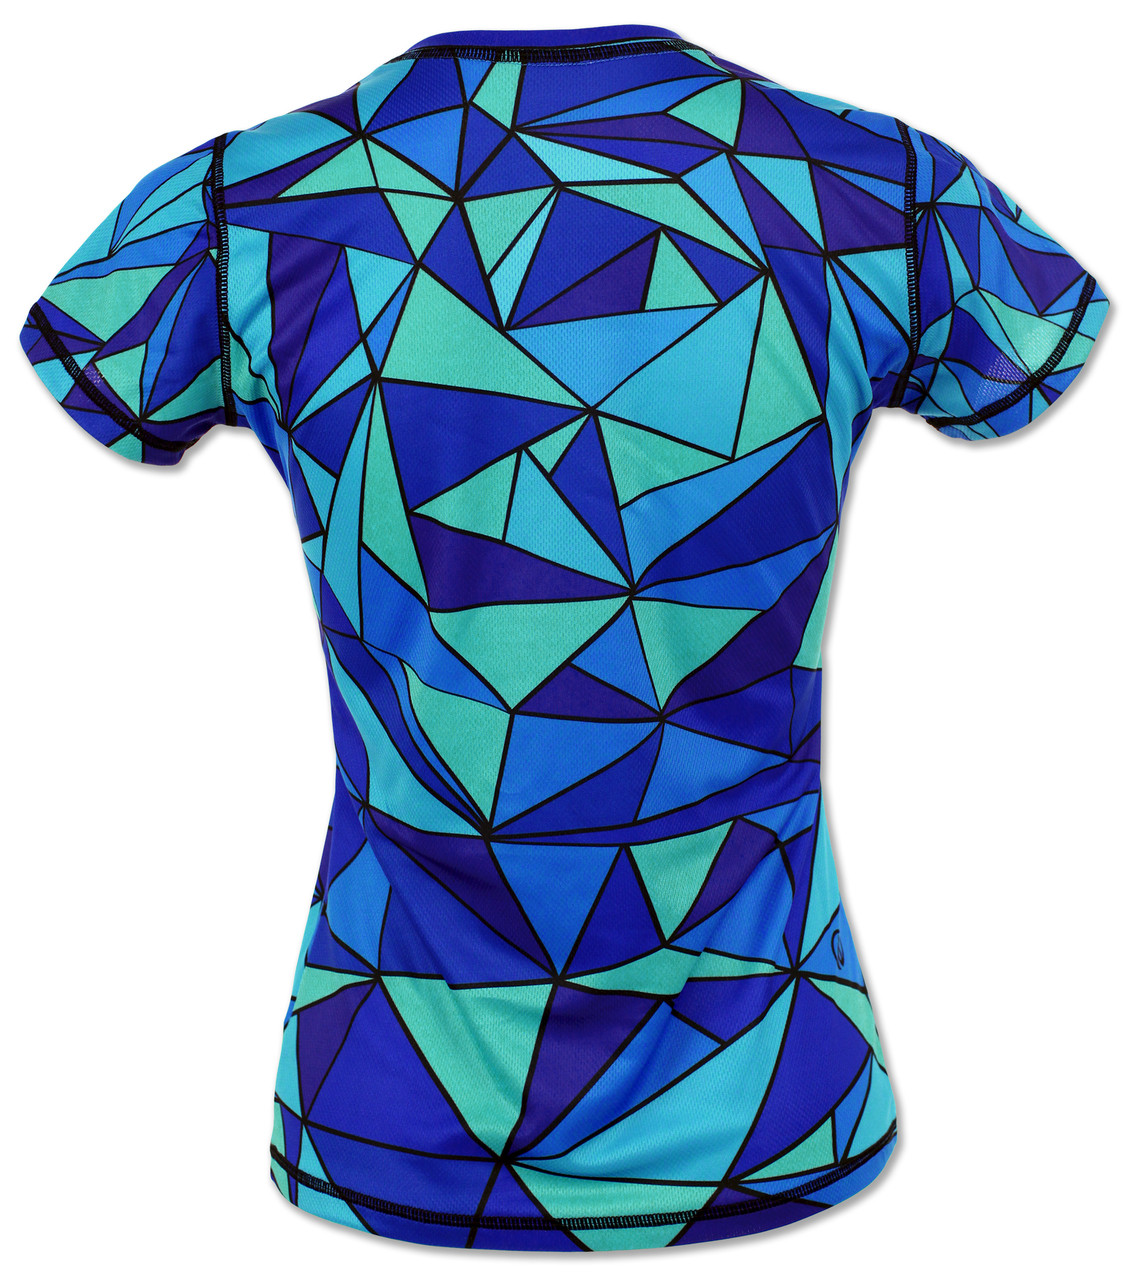 Women's ISO Tech Shirt for Running, Gym & Crossfit